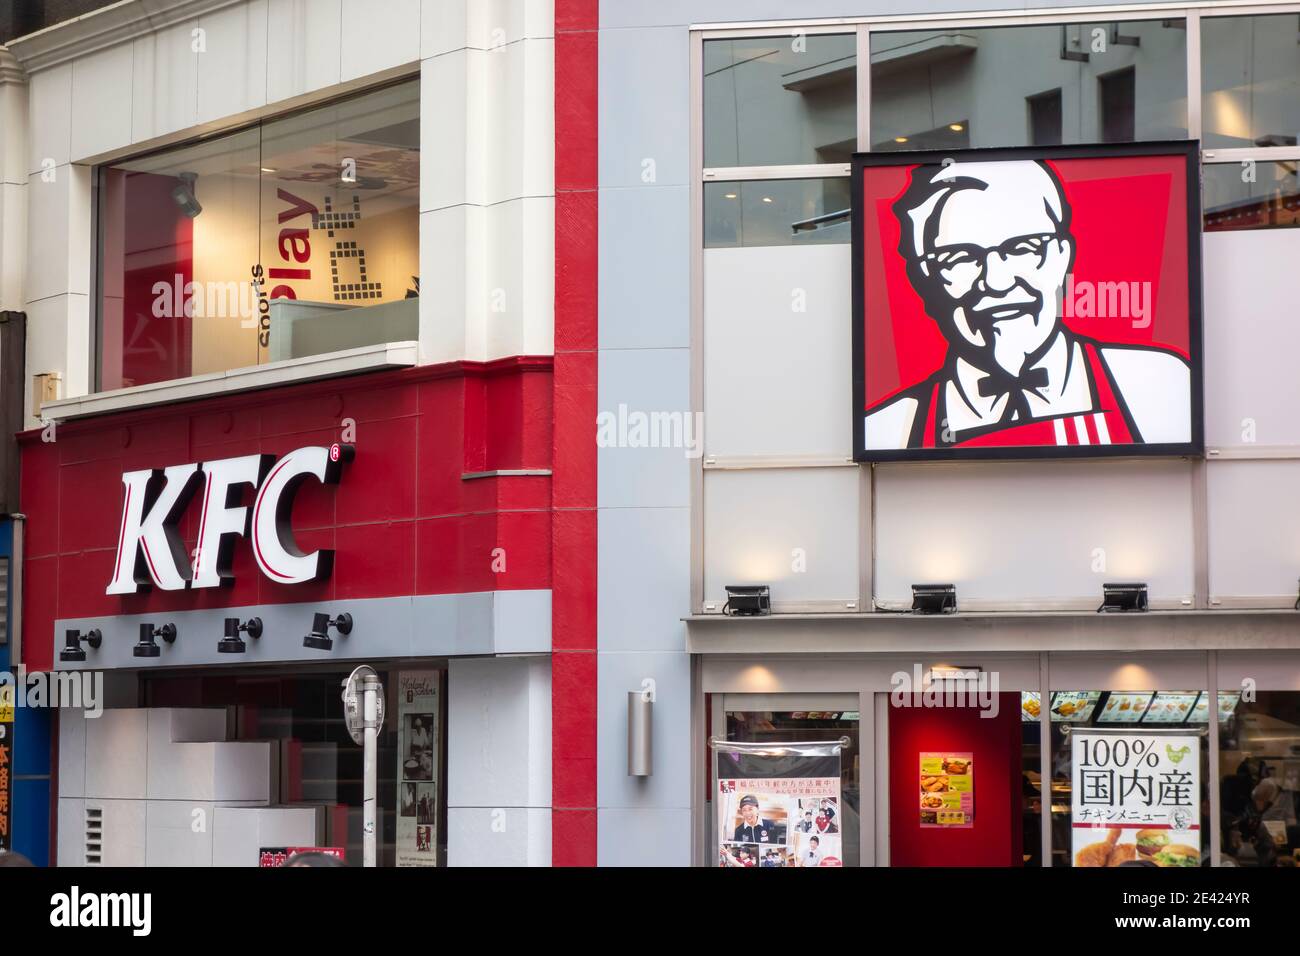 Tokyo, Japan - April 3, 2015: KFC restaurant sign. KFC is an American fast food restaurant chain. Stock Photo